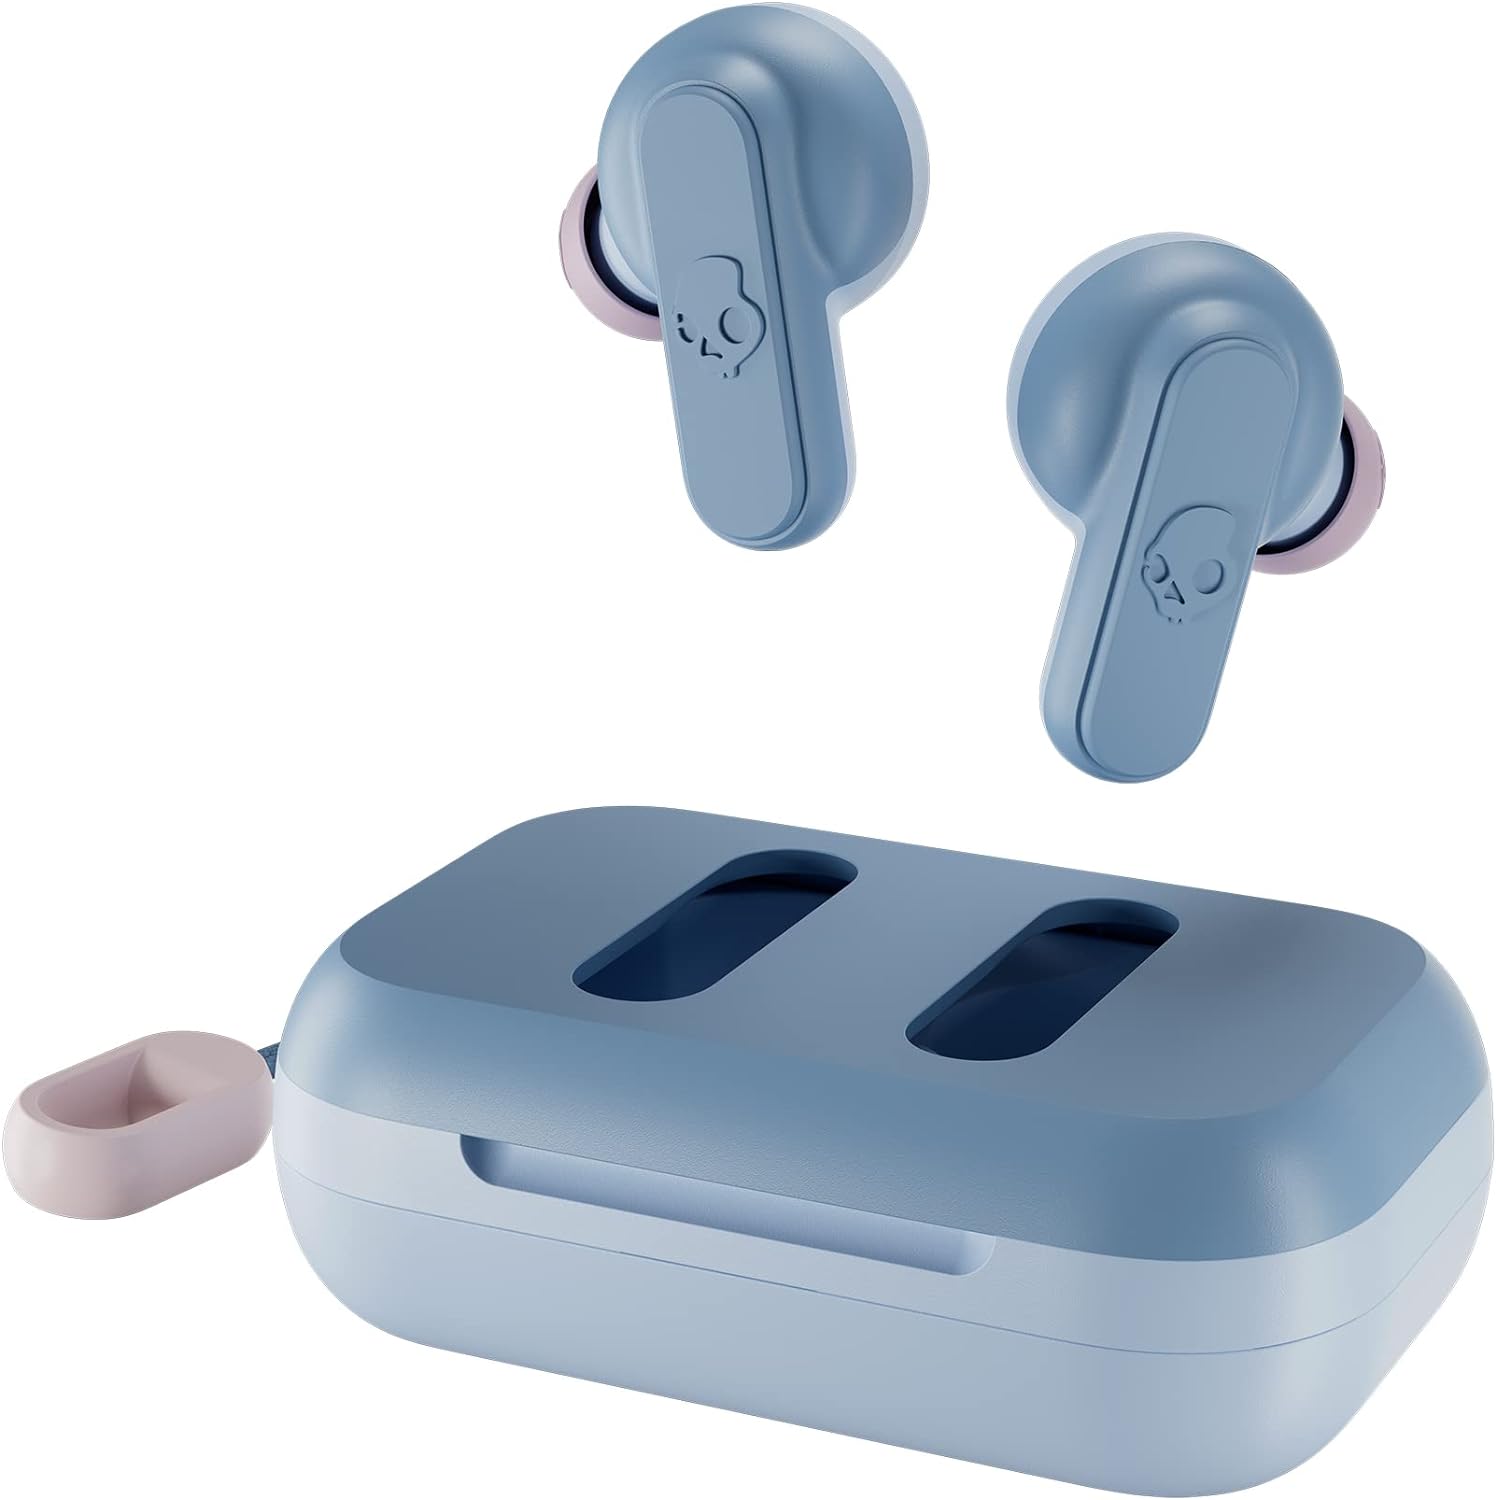 Skullcandy Dime In-Ear Wireless Earbuds - Light Blue - Excellent